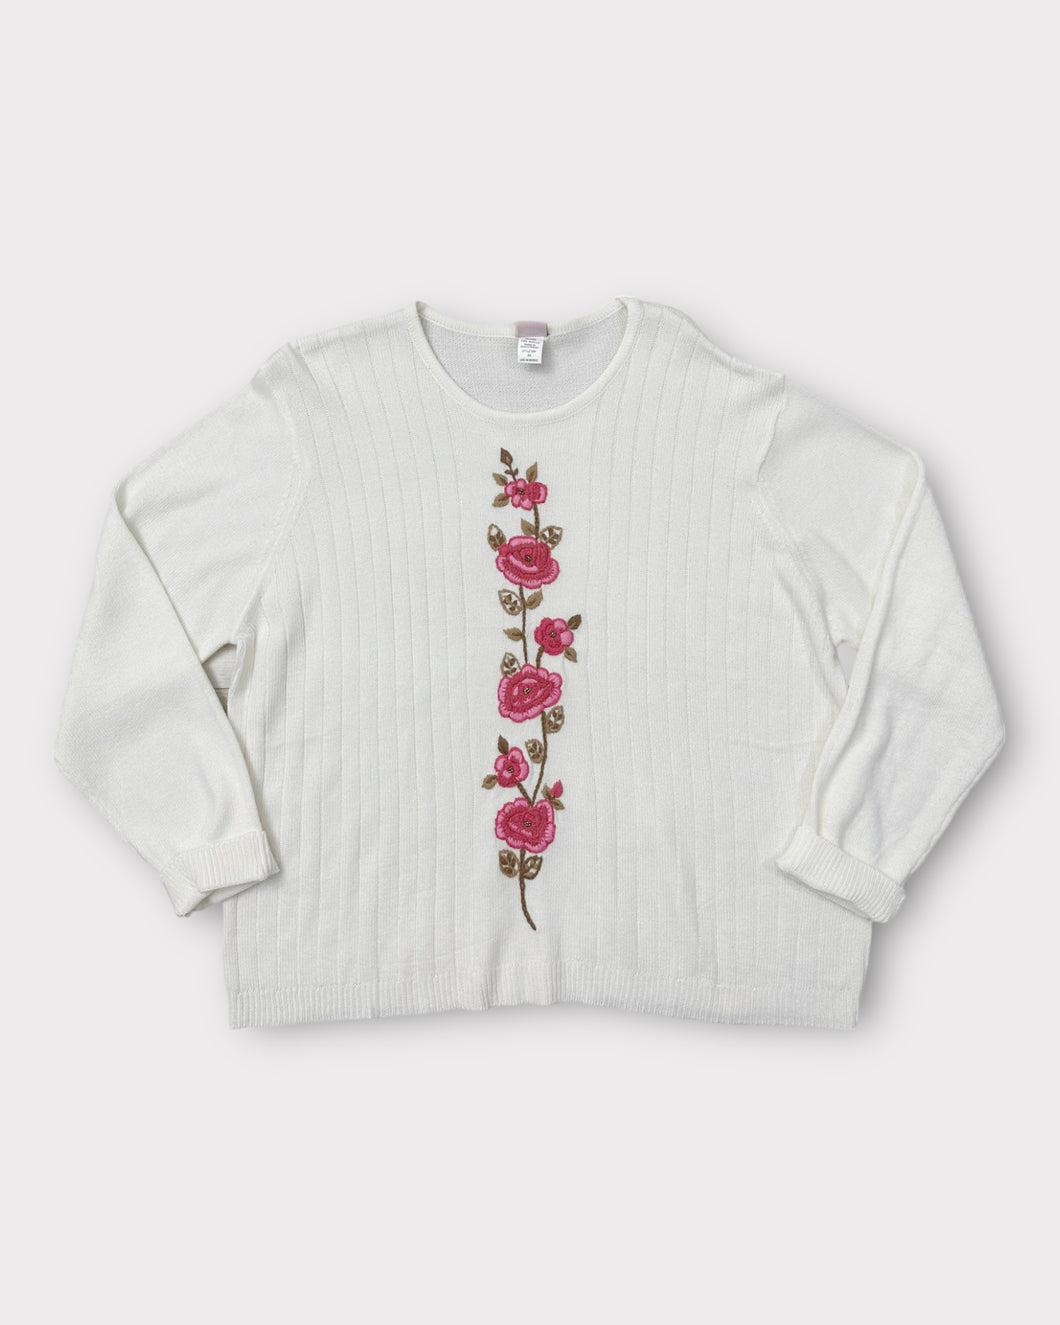 Vintage Floral Creme Knit Sweater (3X)